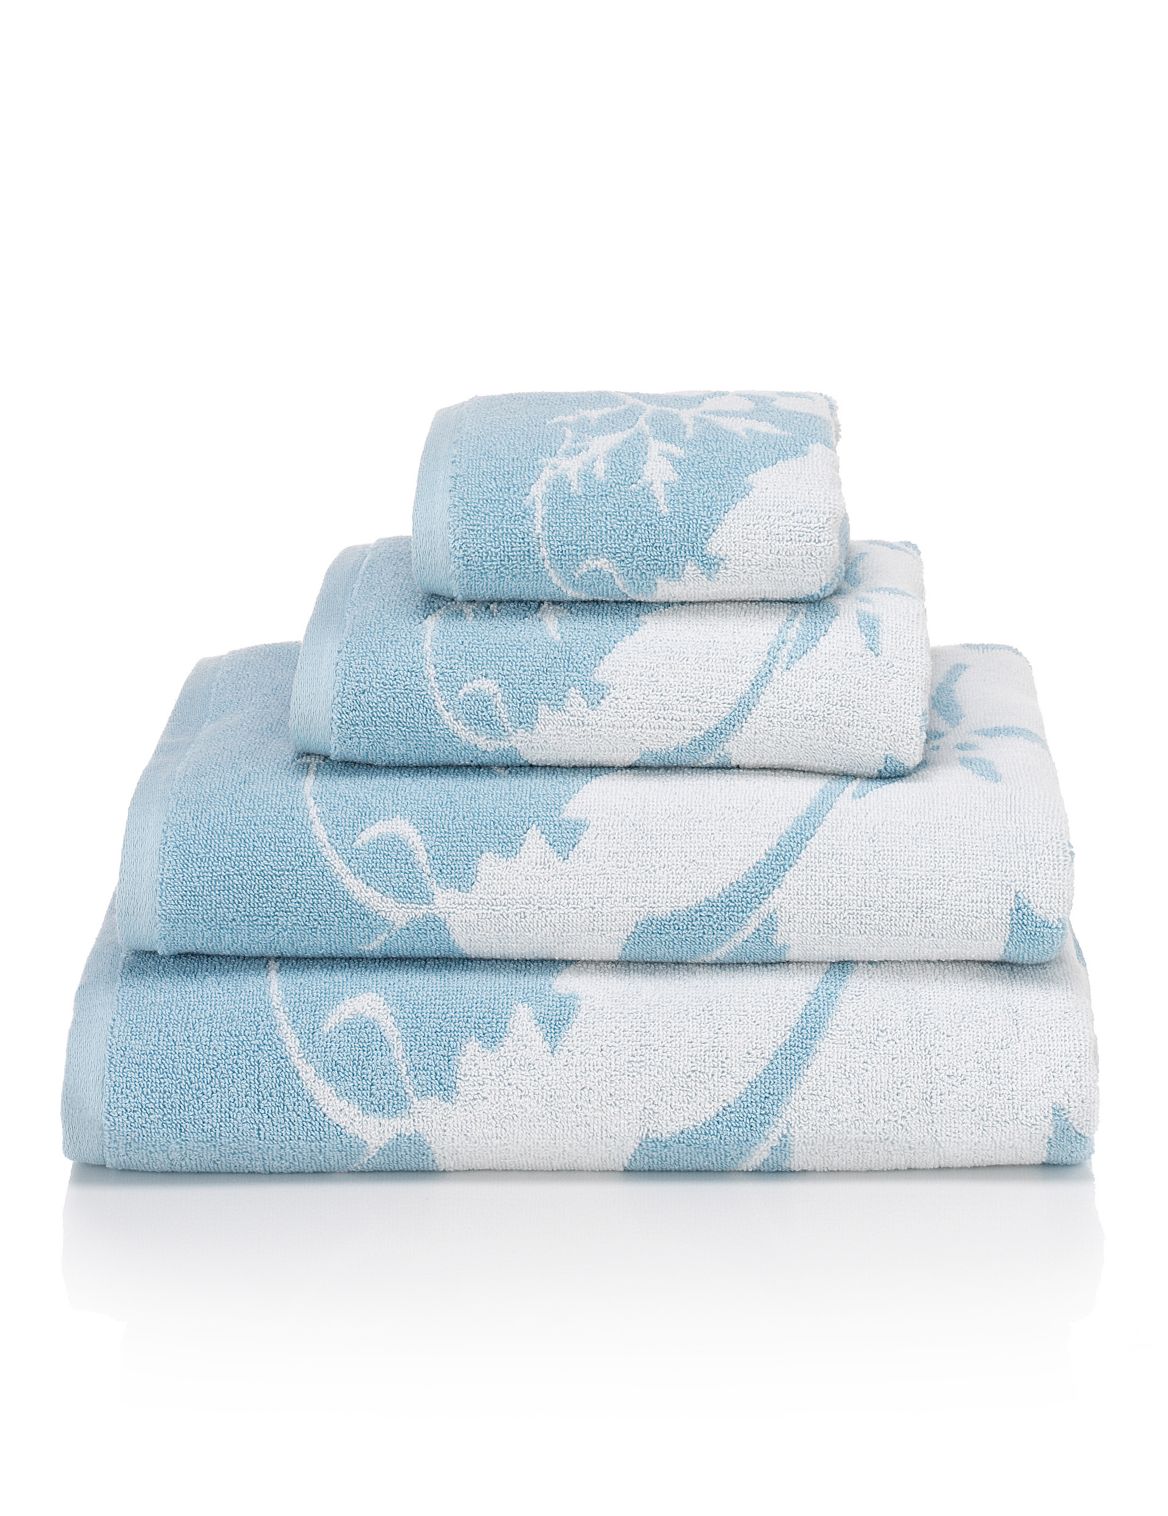 Cowslip Placement Towels Duck Egg | Twittercast